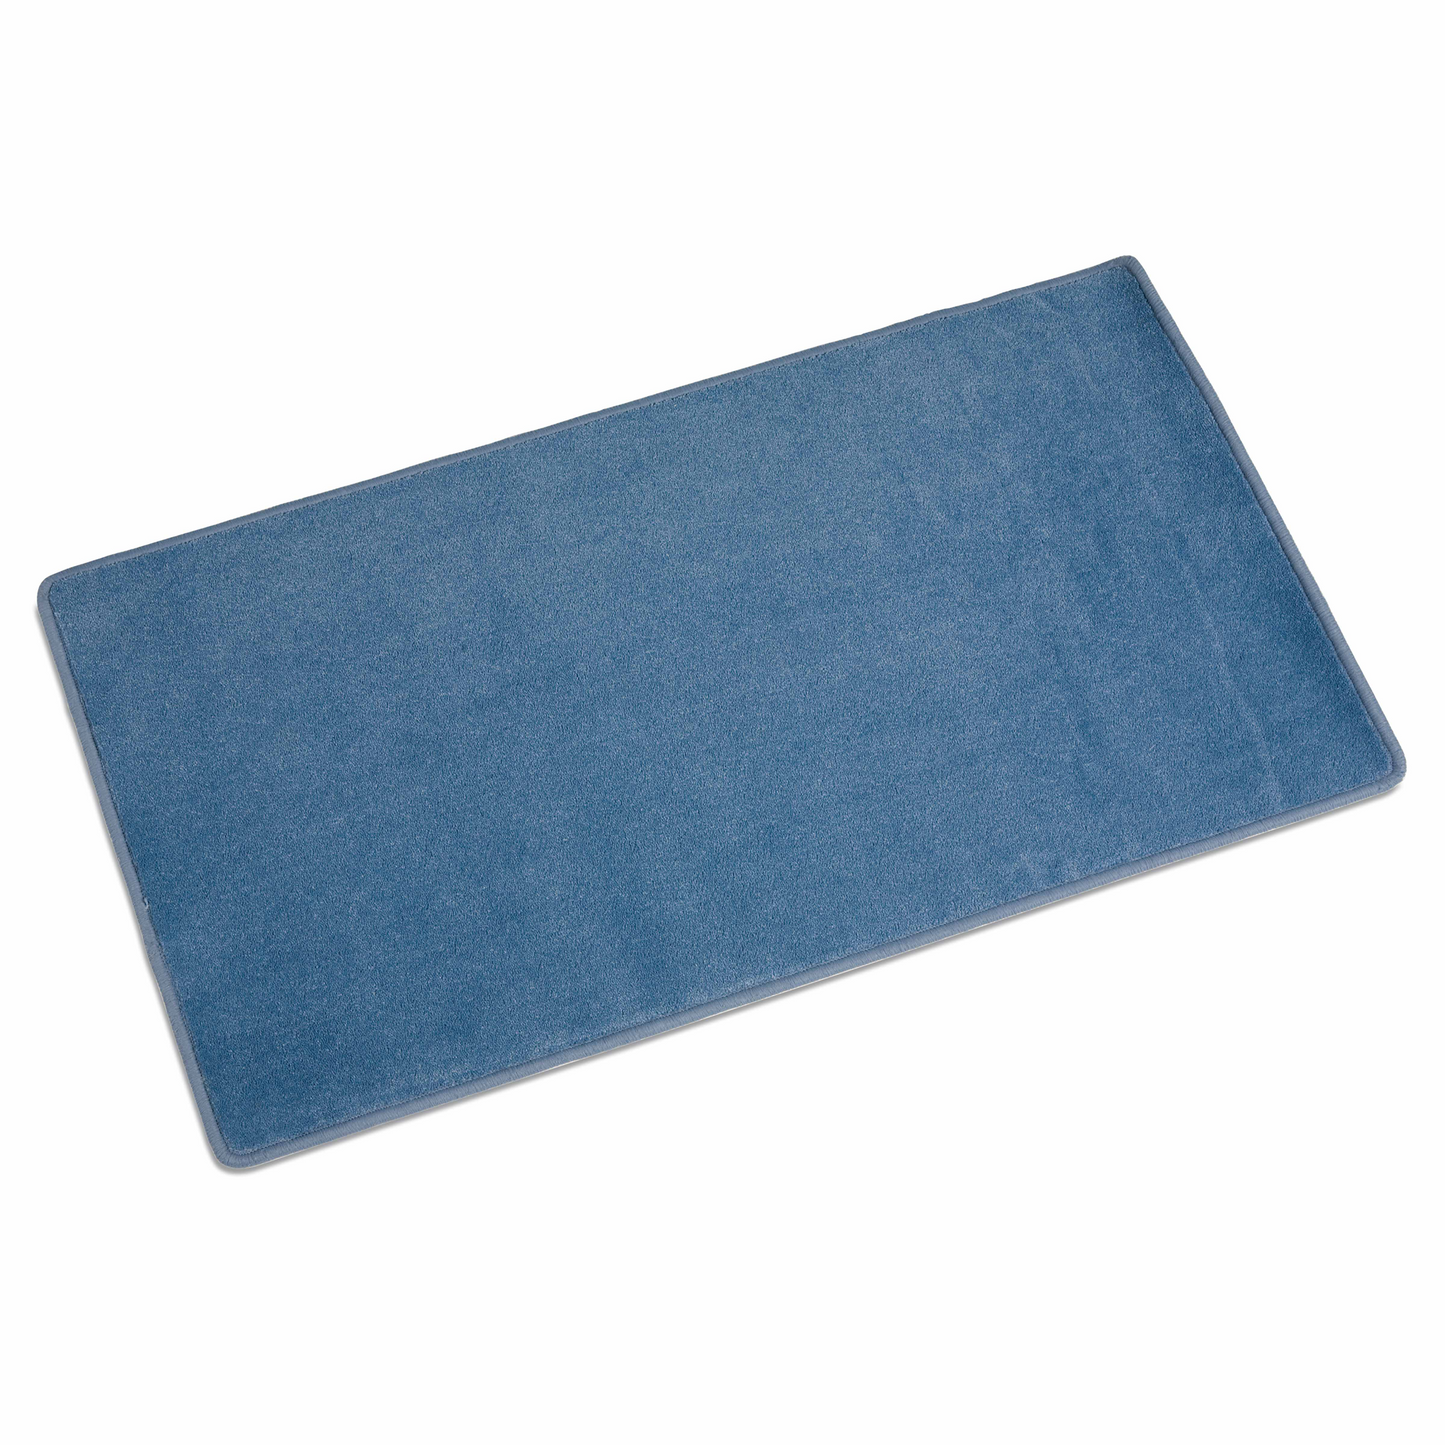 Floor mat light blue - Nienhuis AMI